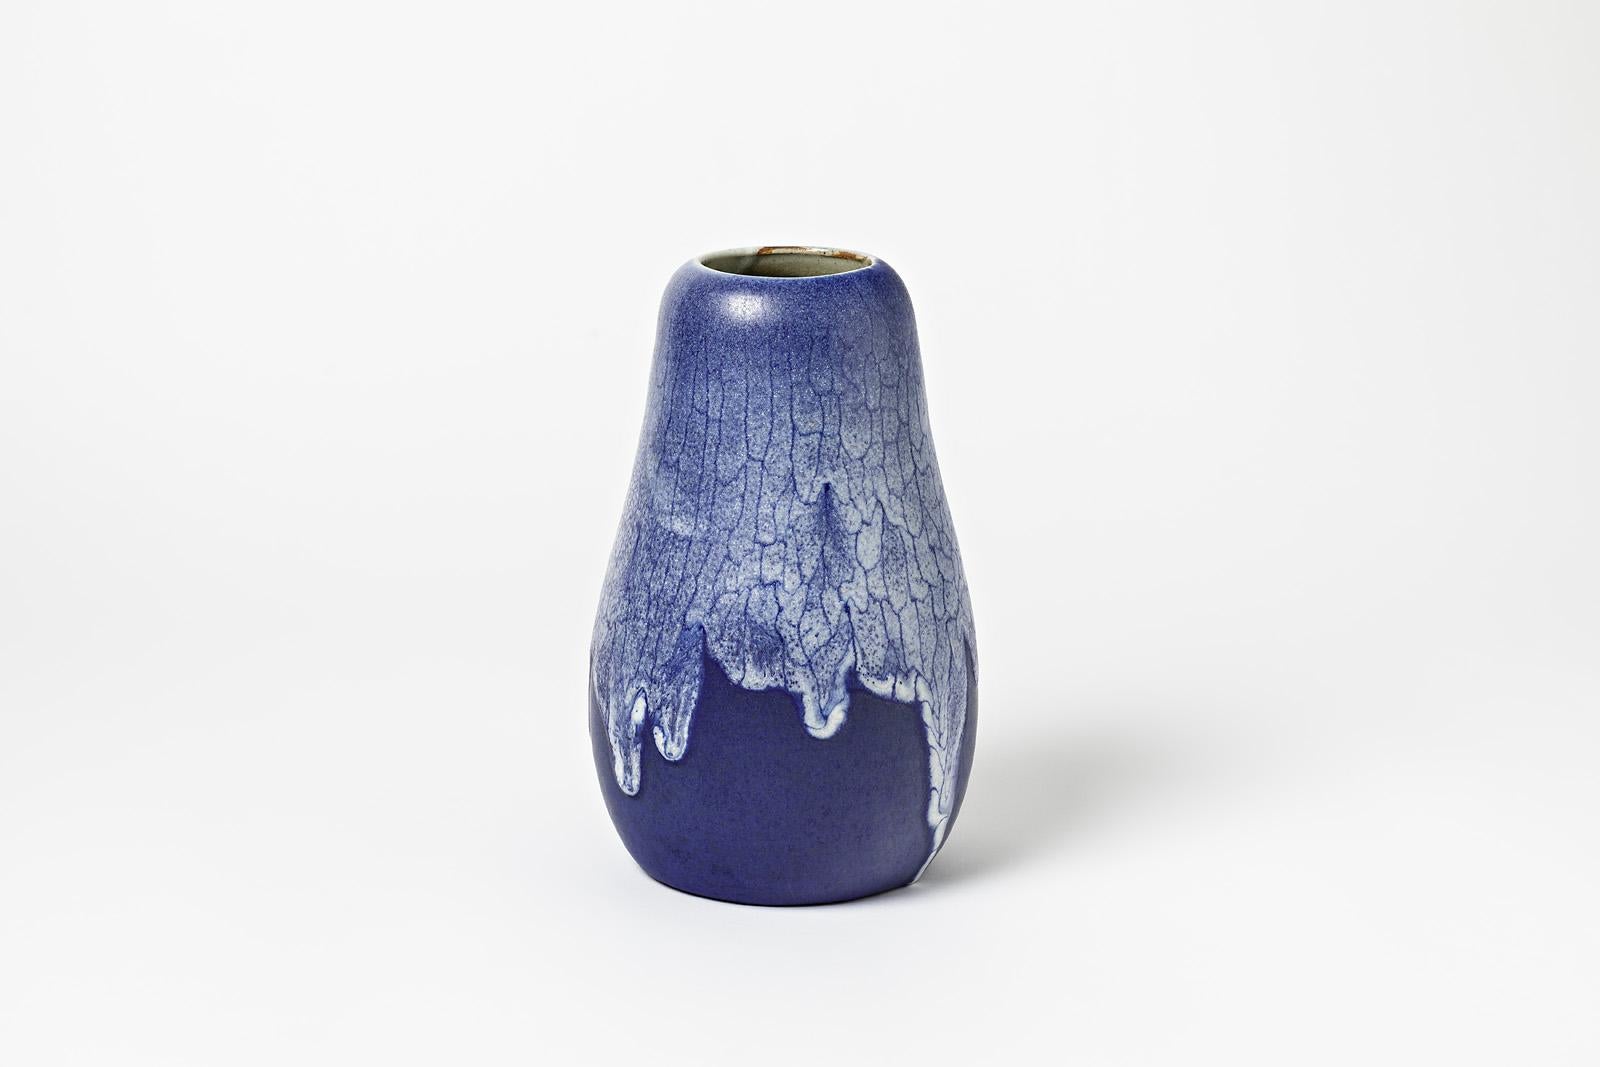 A ceramic vase with blue and white glazes decoration by Leon Pointu.
Handwritten signature under the base.
Circa 1920.
Unique piece.
Perfect original conditions.